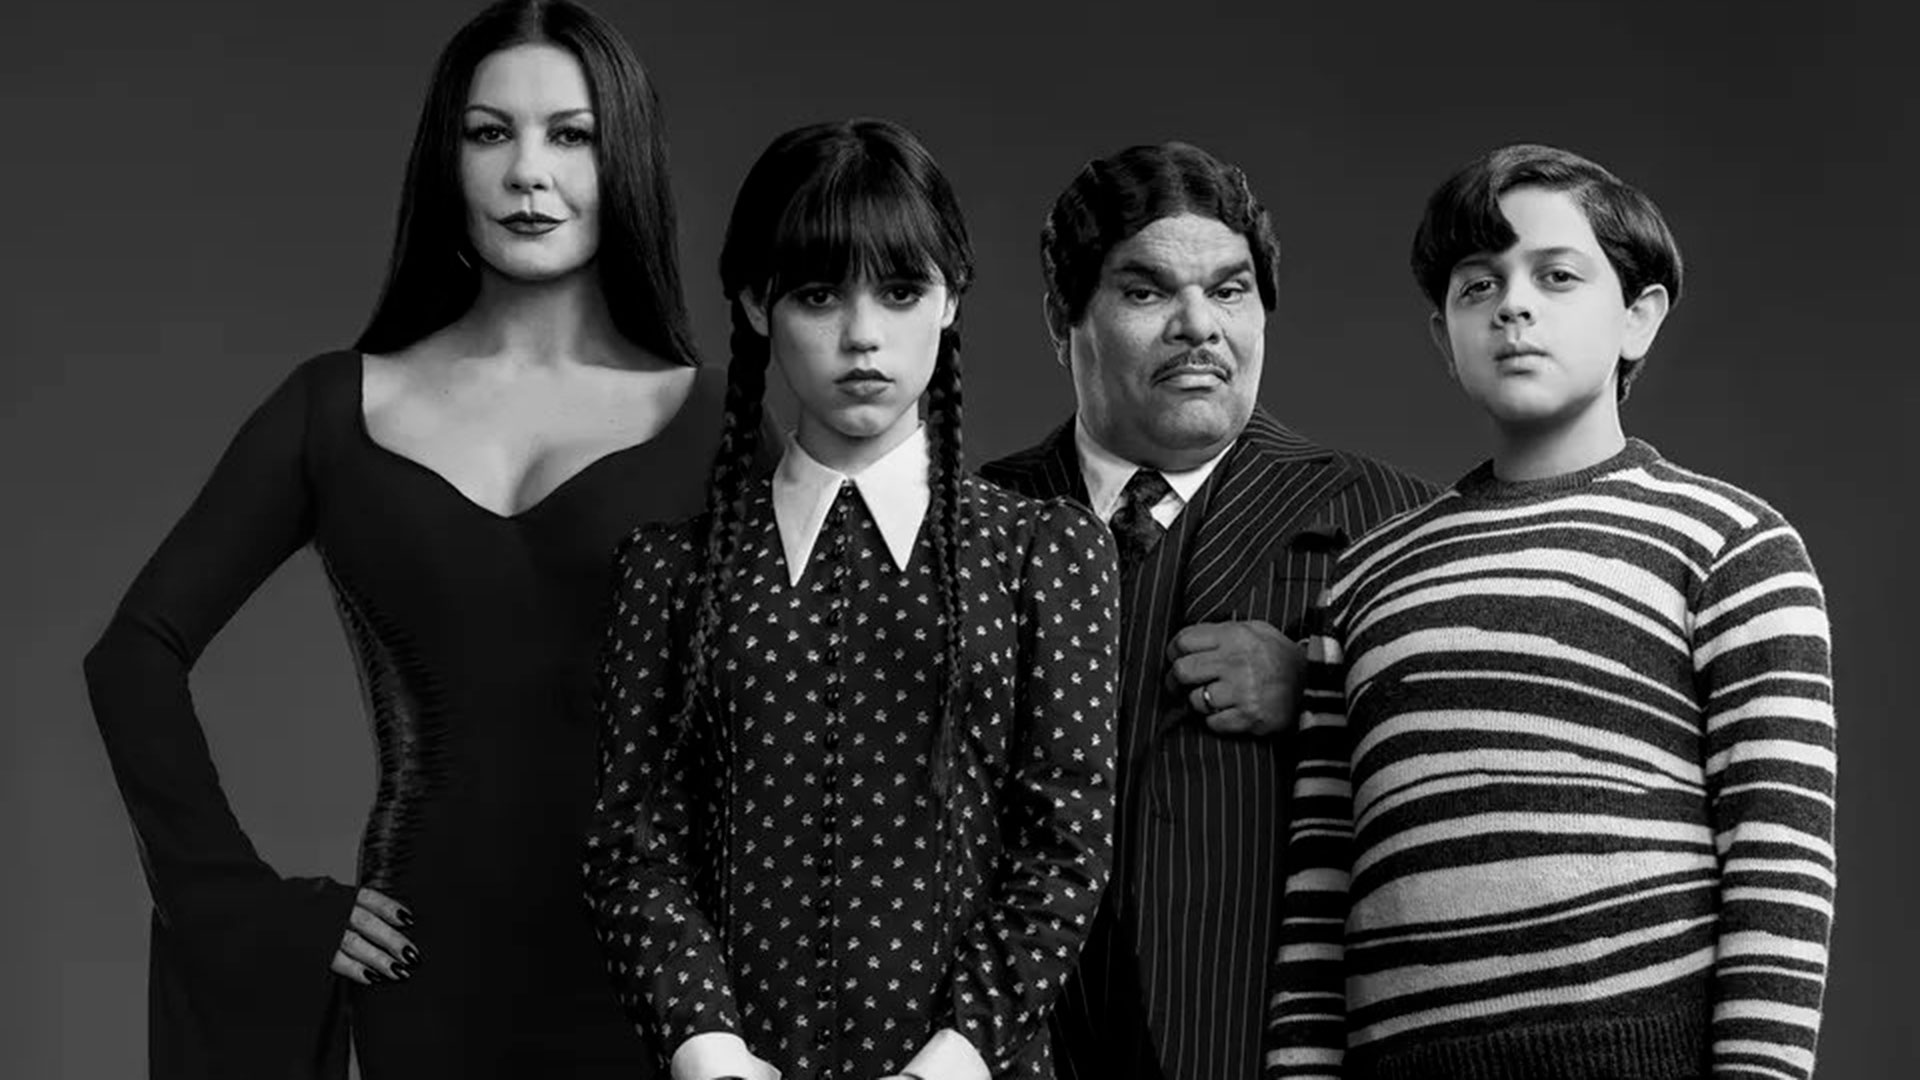 Catherine Zeta-Jones, Luis Guzmán e Isaac Ordonez completan el elenco principal de la familia Addams. (Netflix)